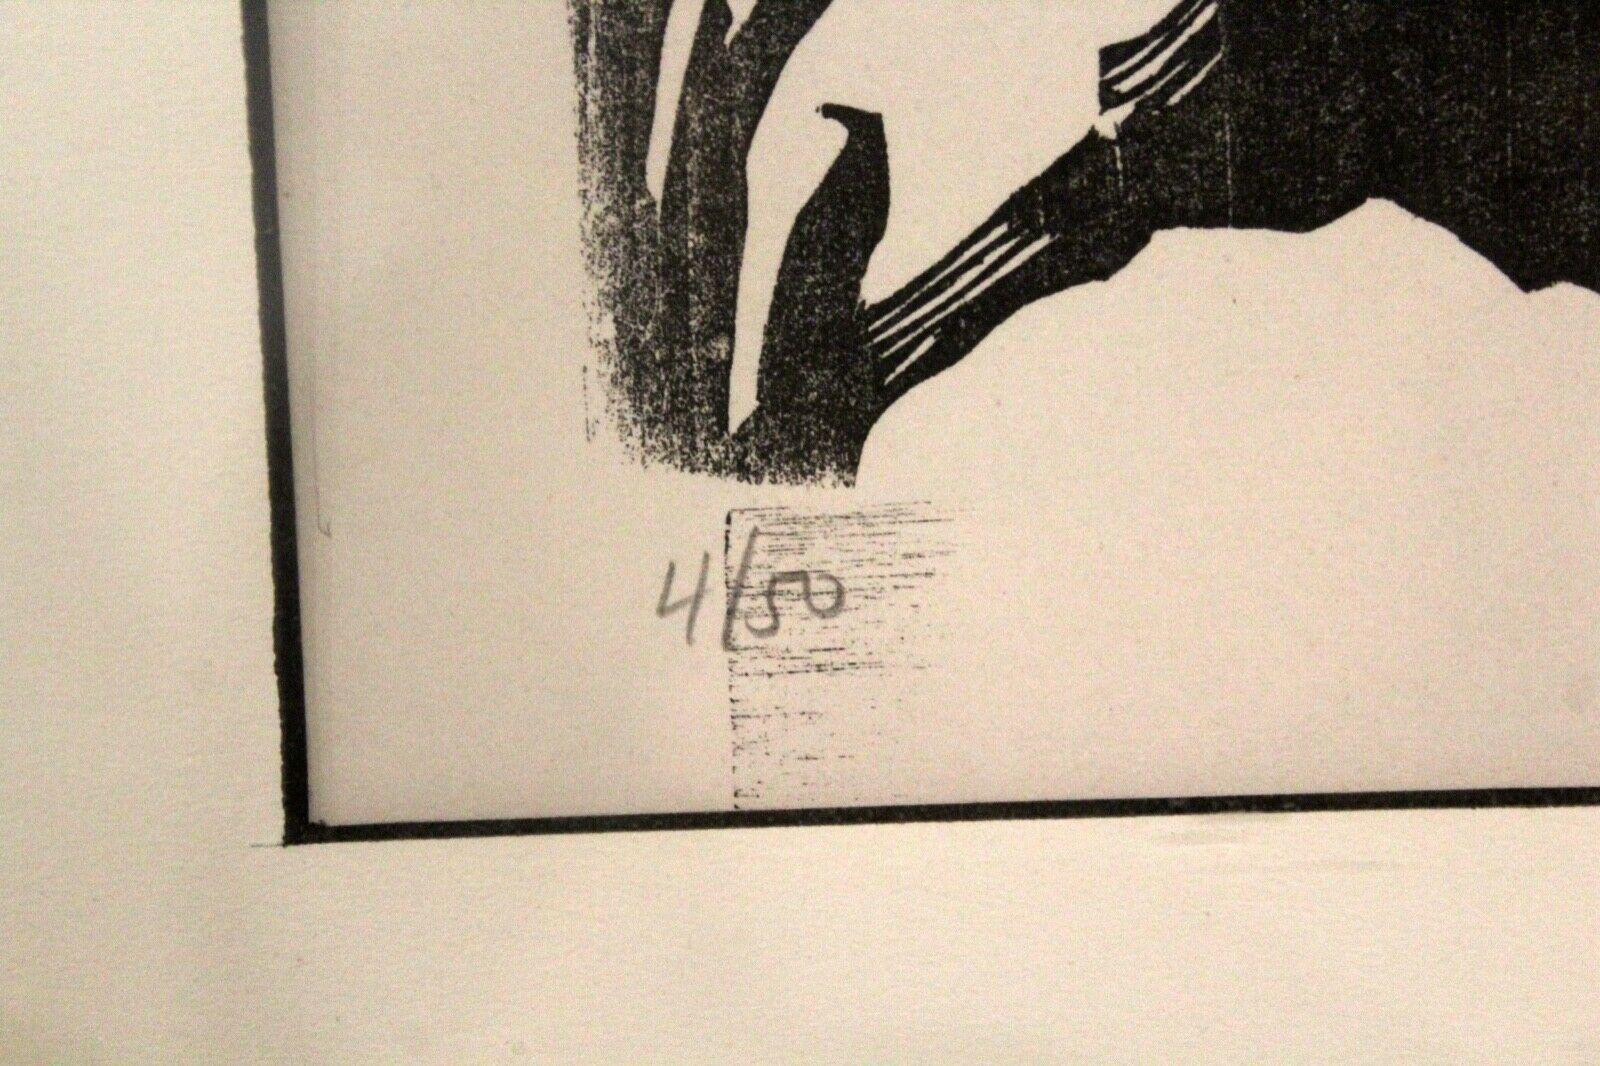 Leonard Baskin De Gheyn gravure sur bois moderne signée 4/50 encadrée 1970 en vente 2